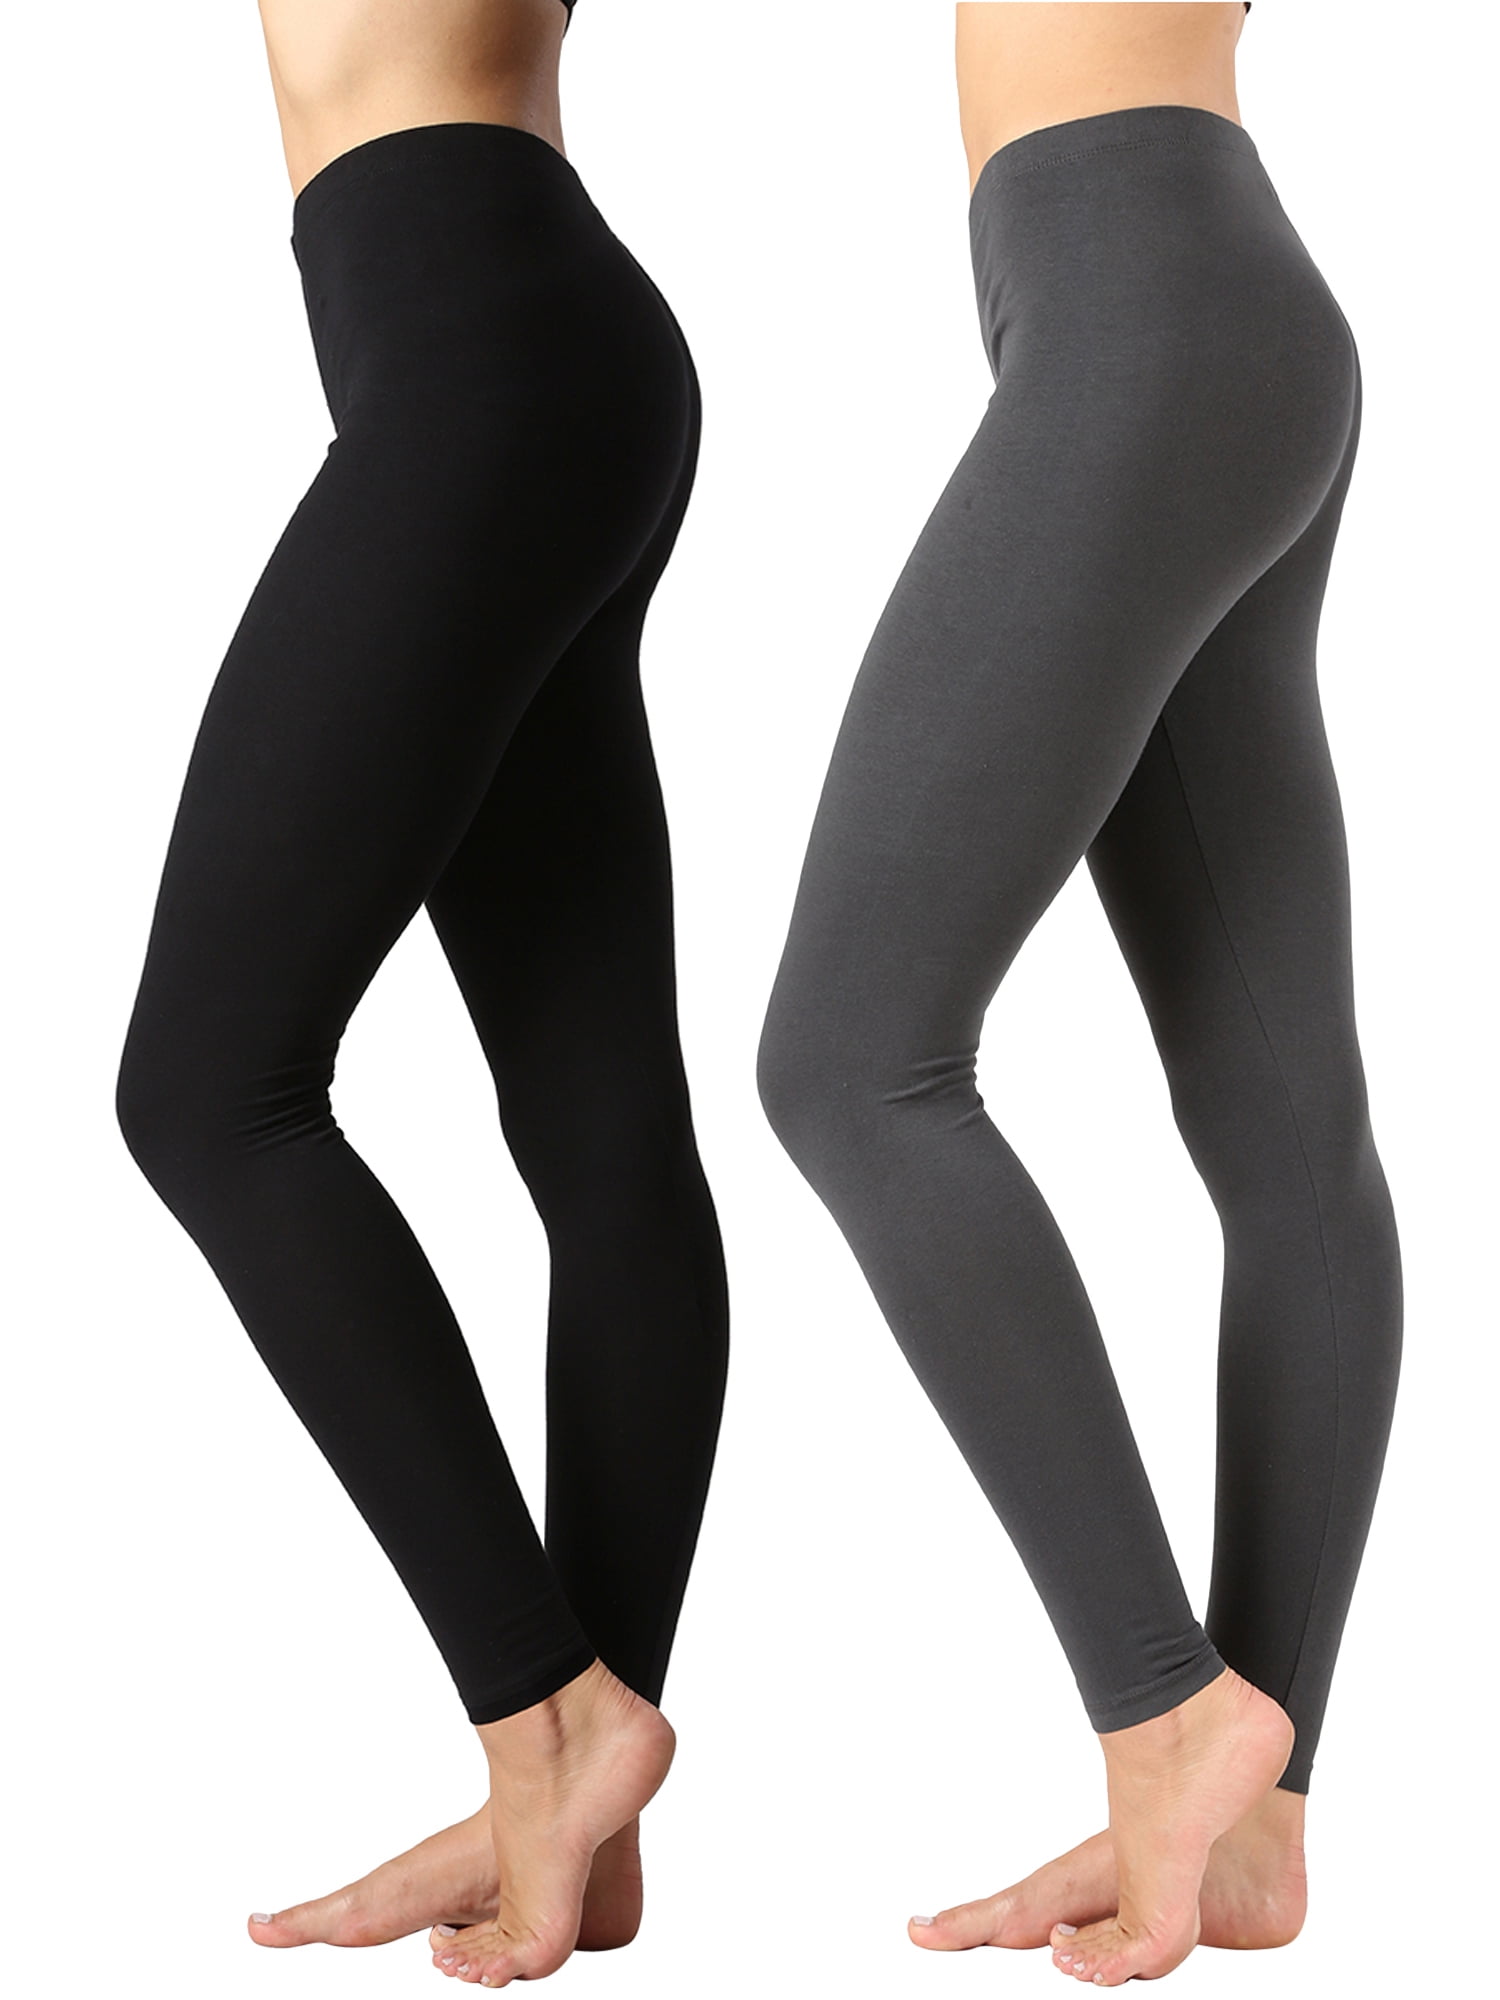 LEGGINGS Yoga Pants PREMIUM Cotton Spandex FULL LENGTH S M L XL Plus 1X 2X 3X 